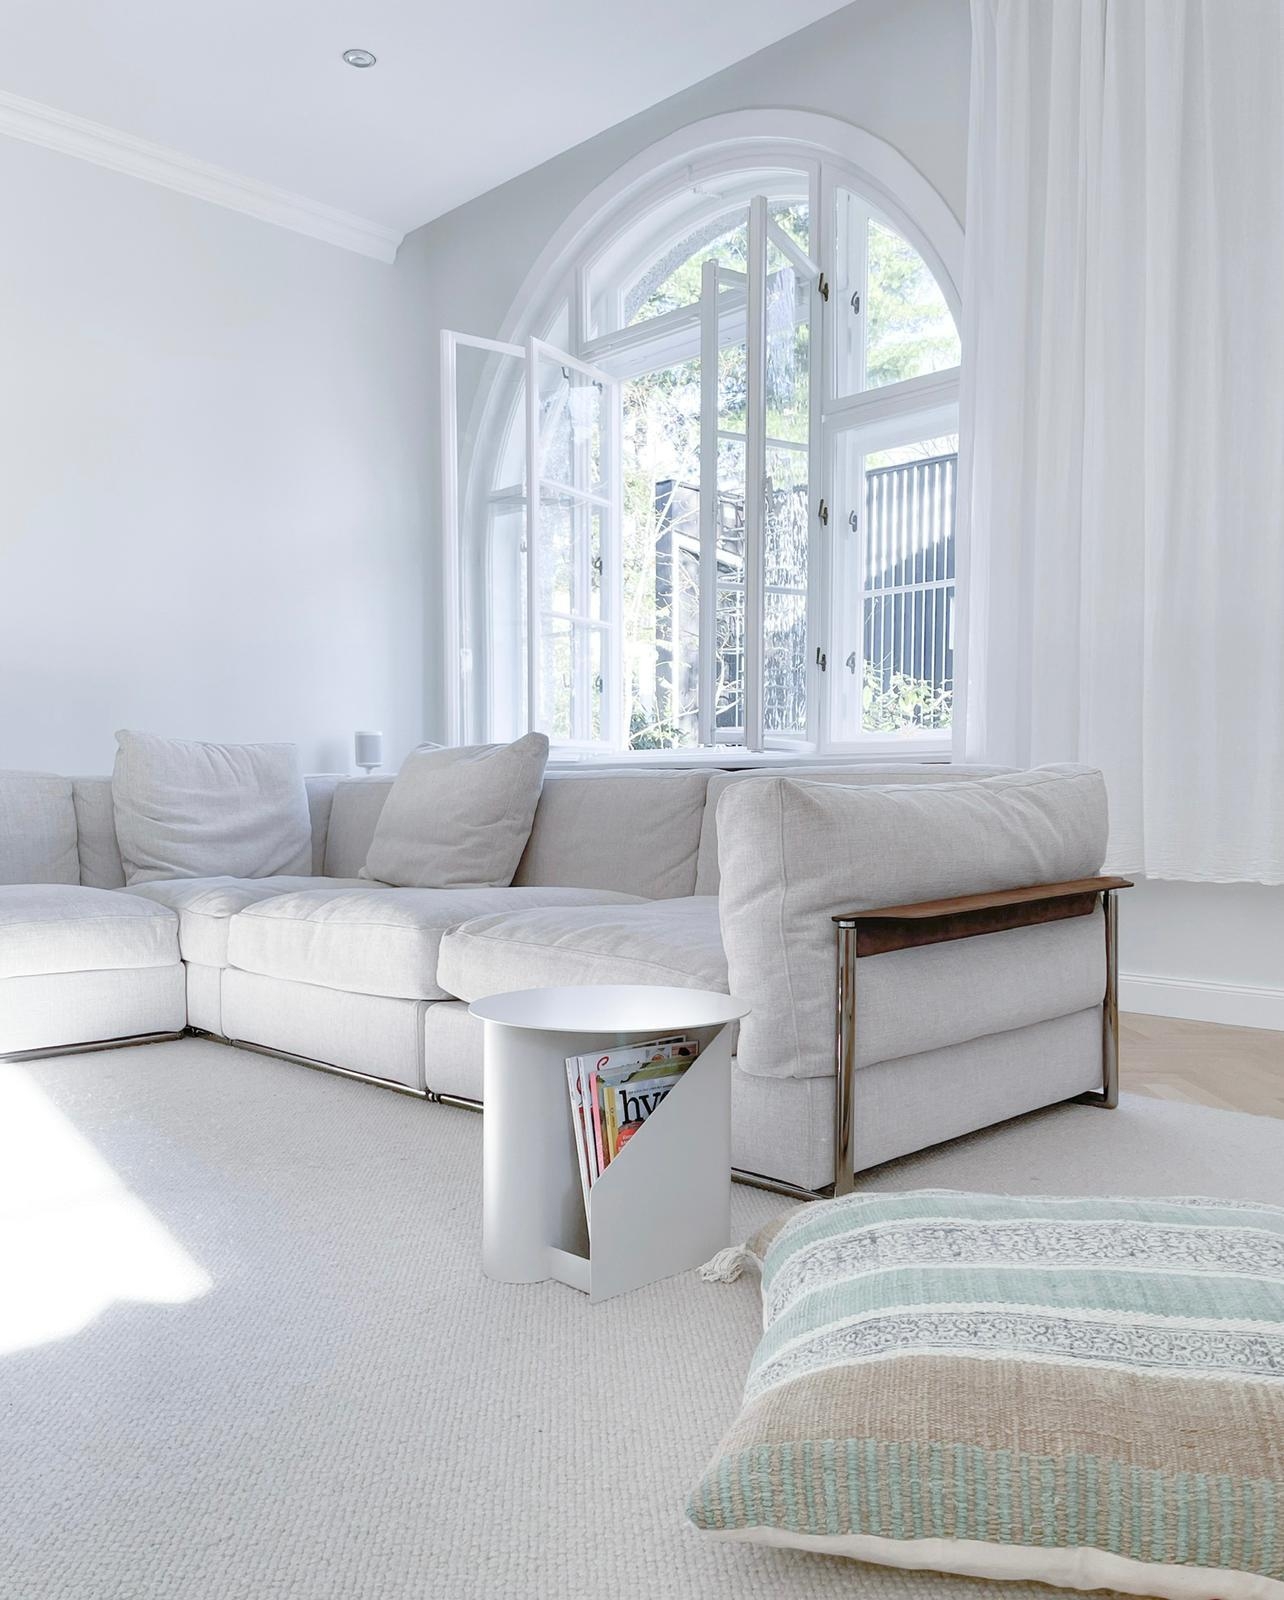 Bogenfenster + neue Couch. 
#whiteliving #beachhousefeeling #whiteliving #scandinavianstyle